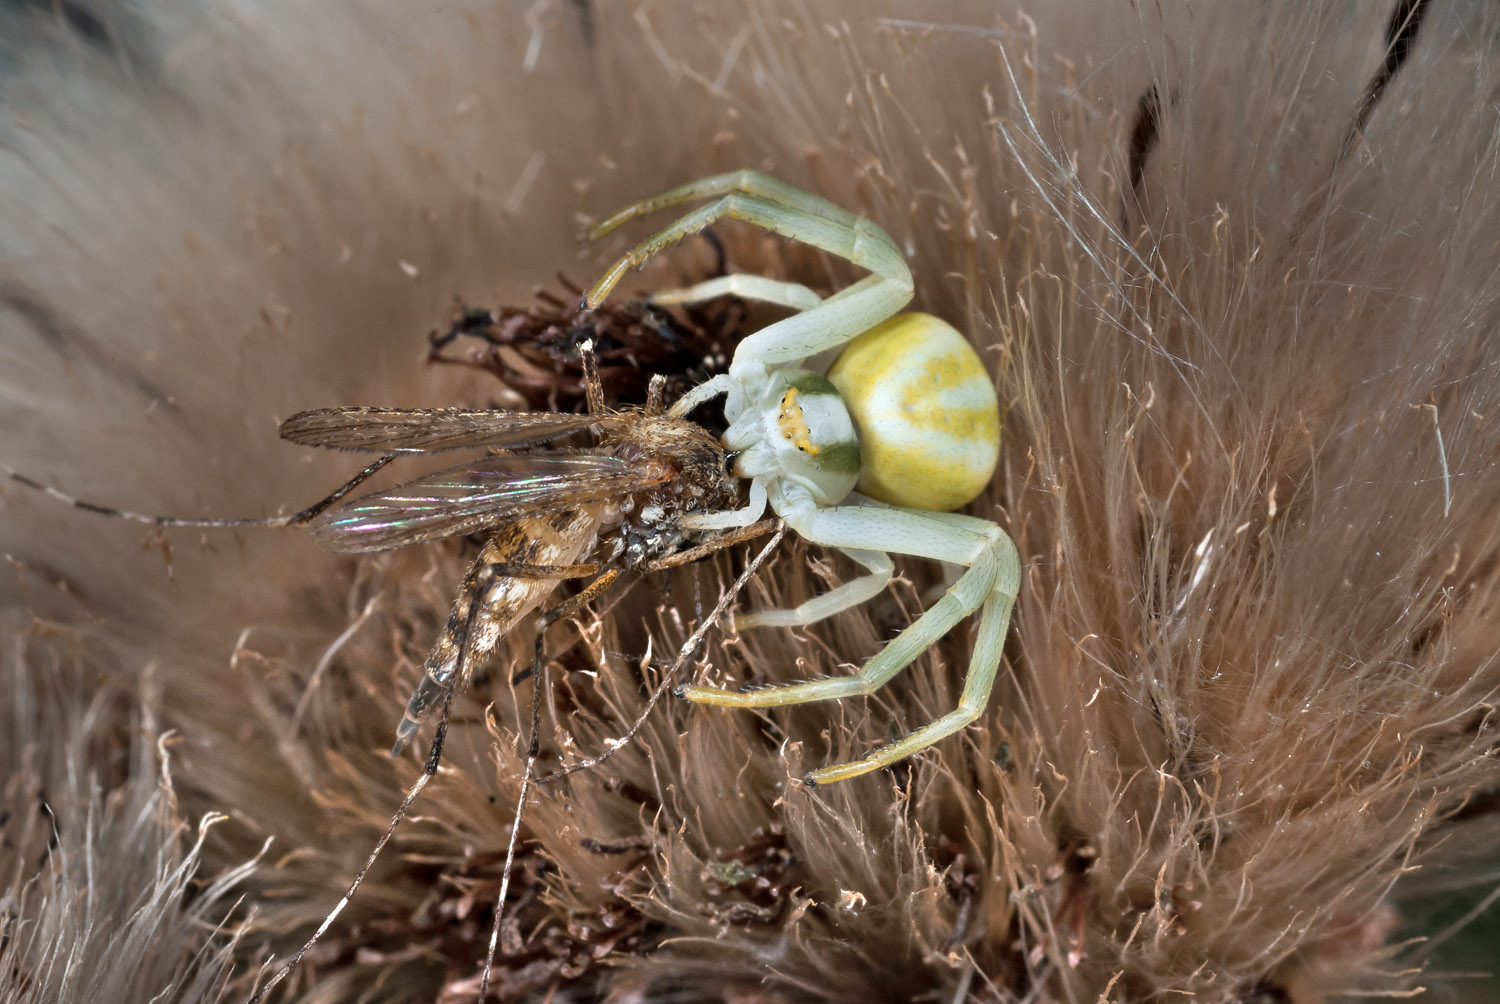 Crab-spider with its prey, Bardonecchia (To)